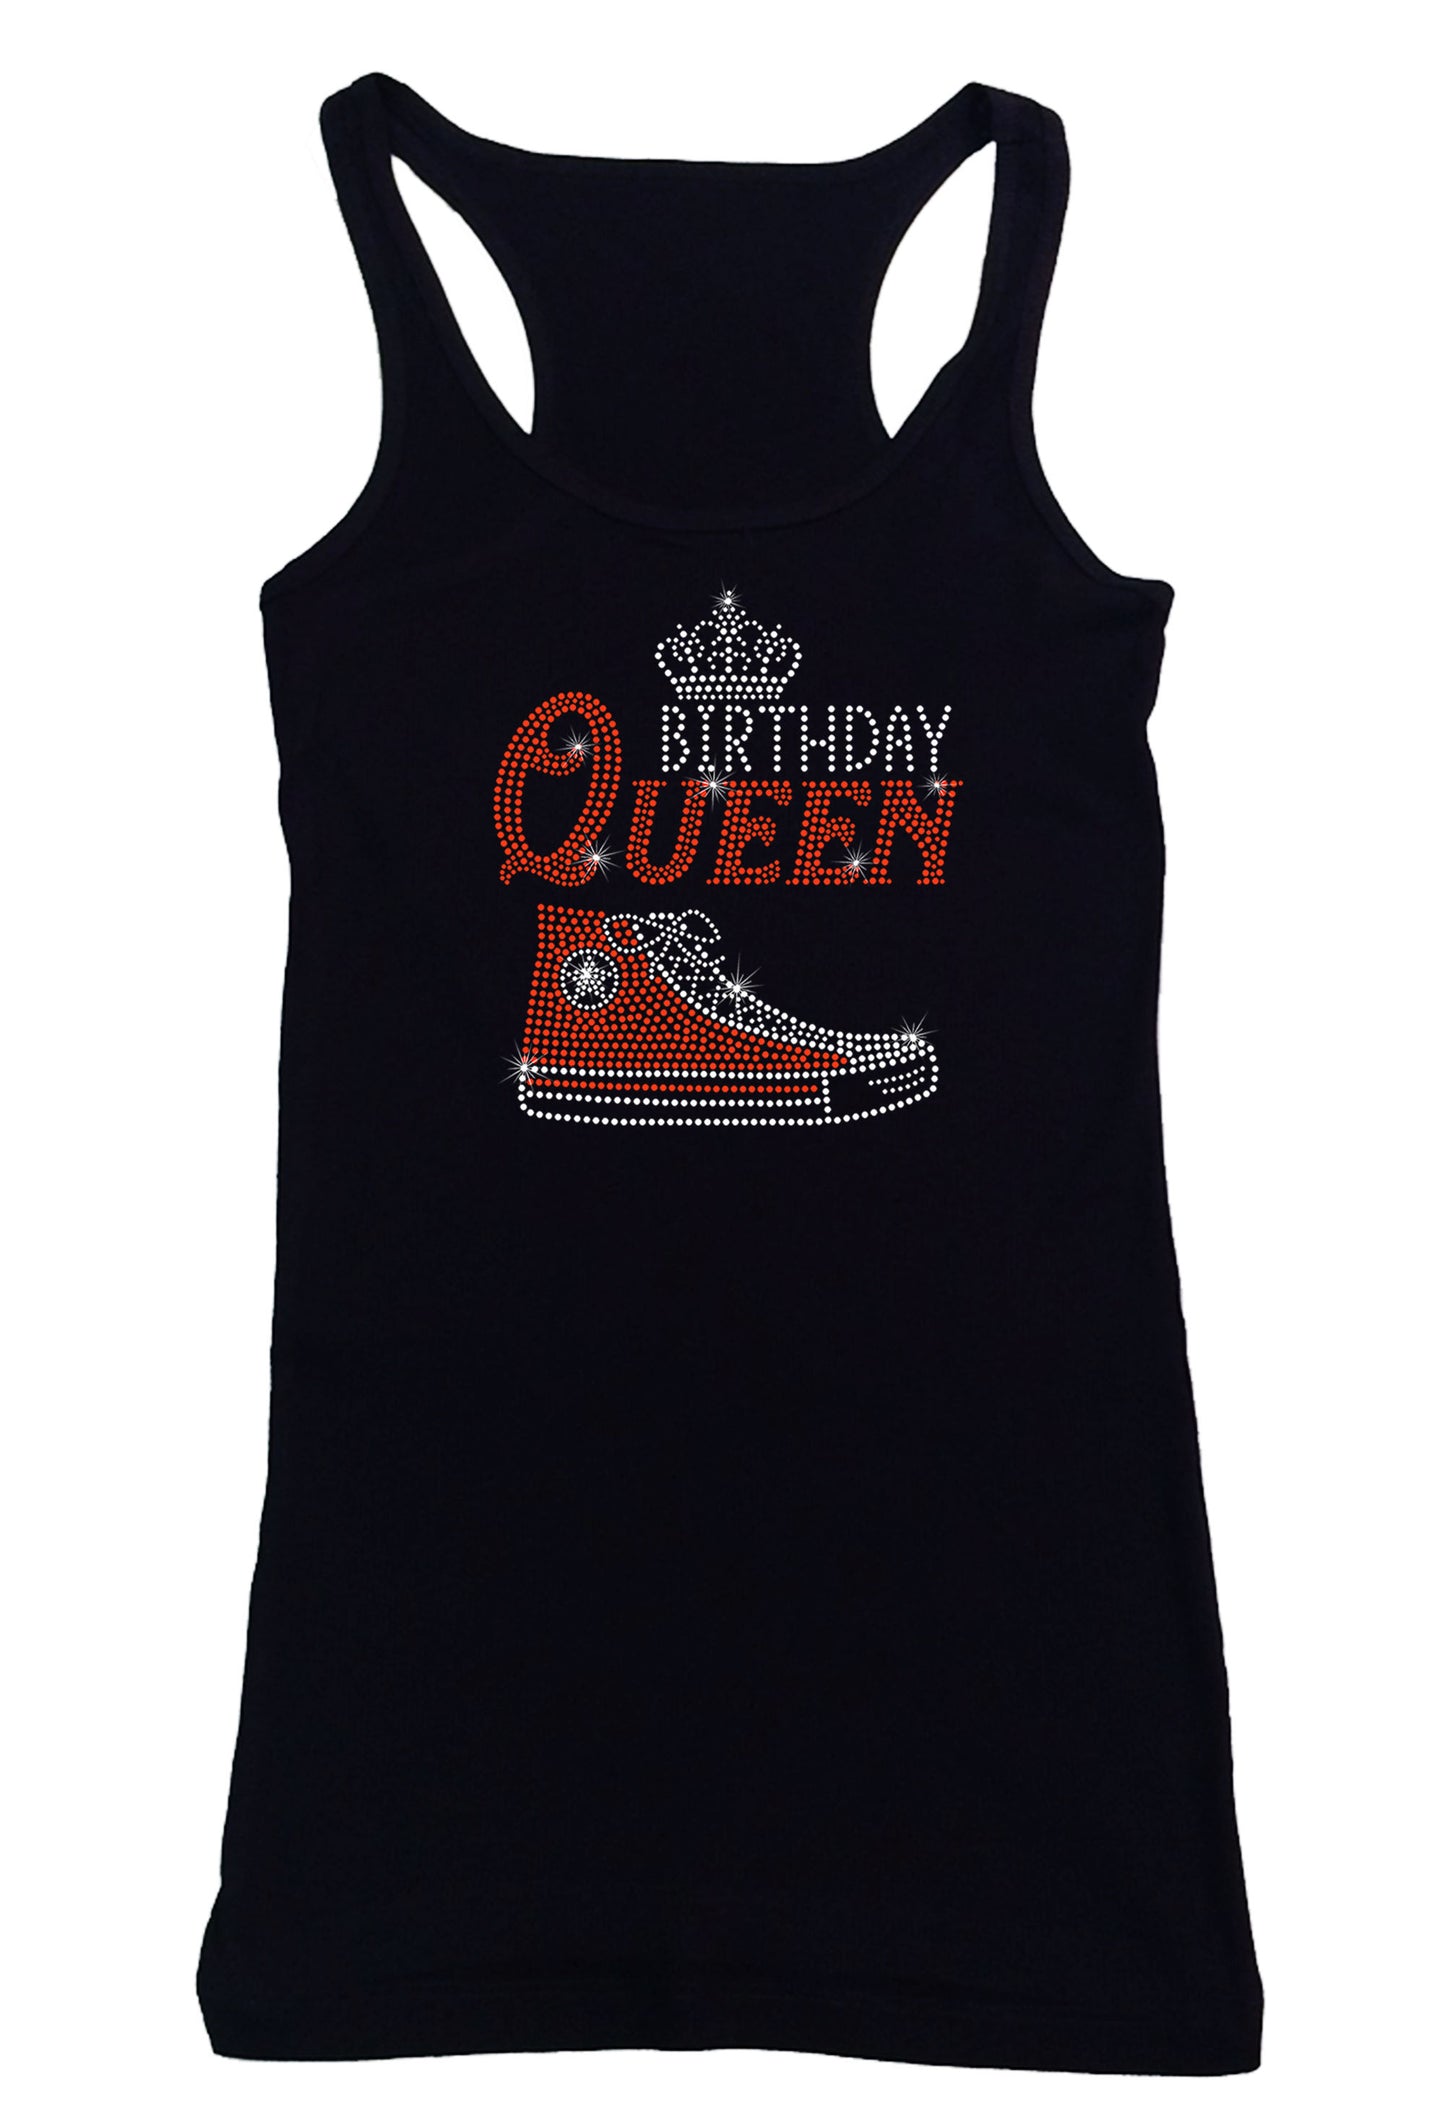 Women's Rhinestone Fitted Shirt Birthday Queen w Chuck Shoe